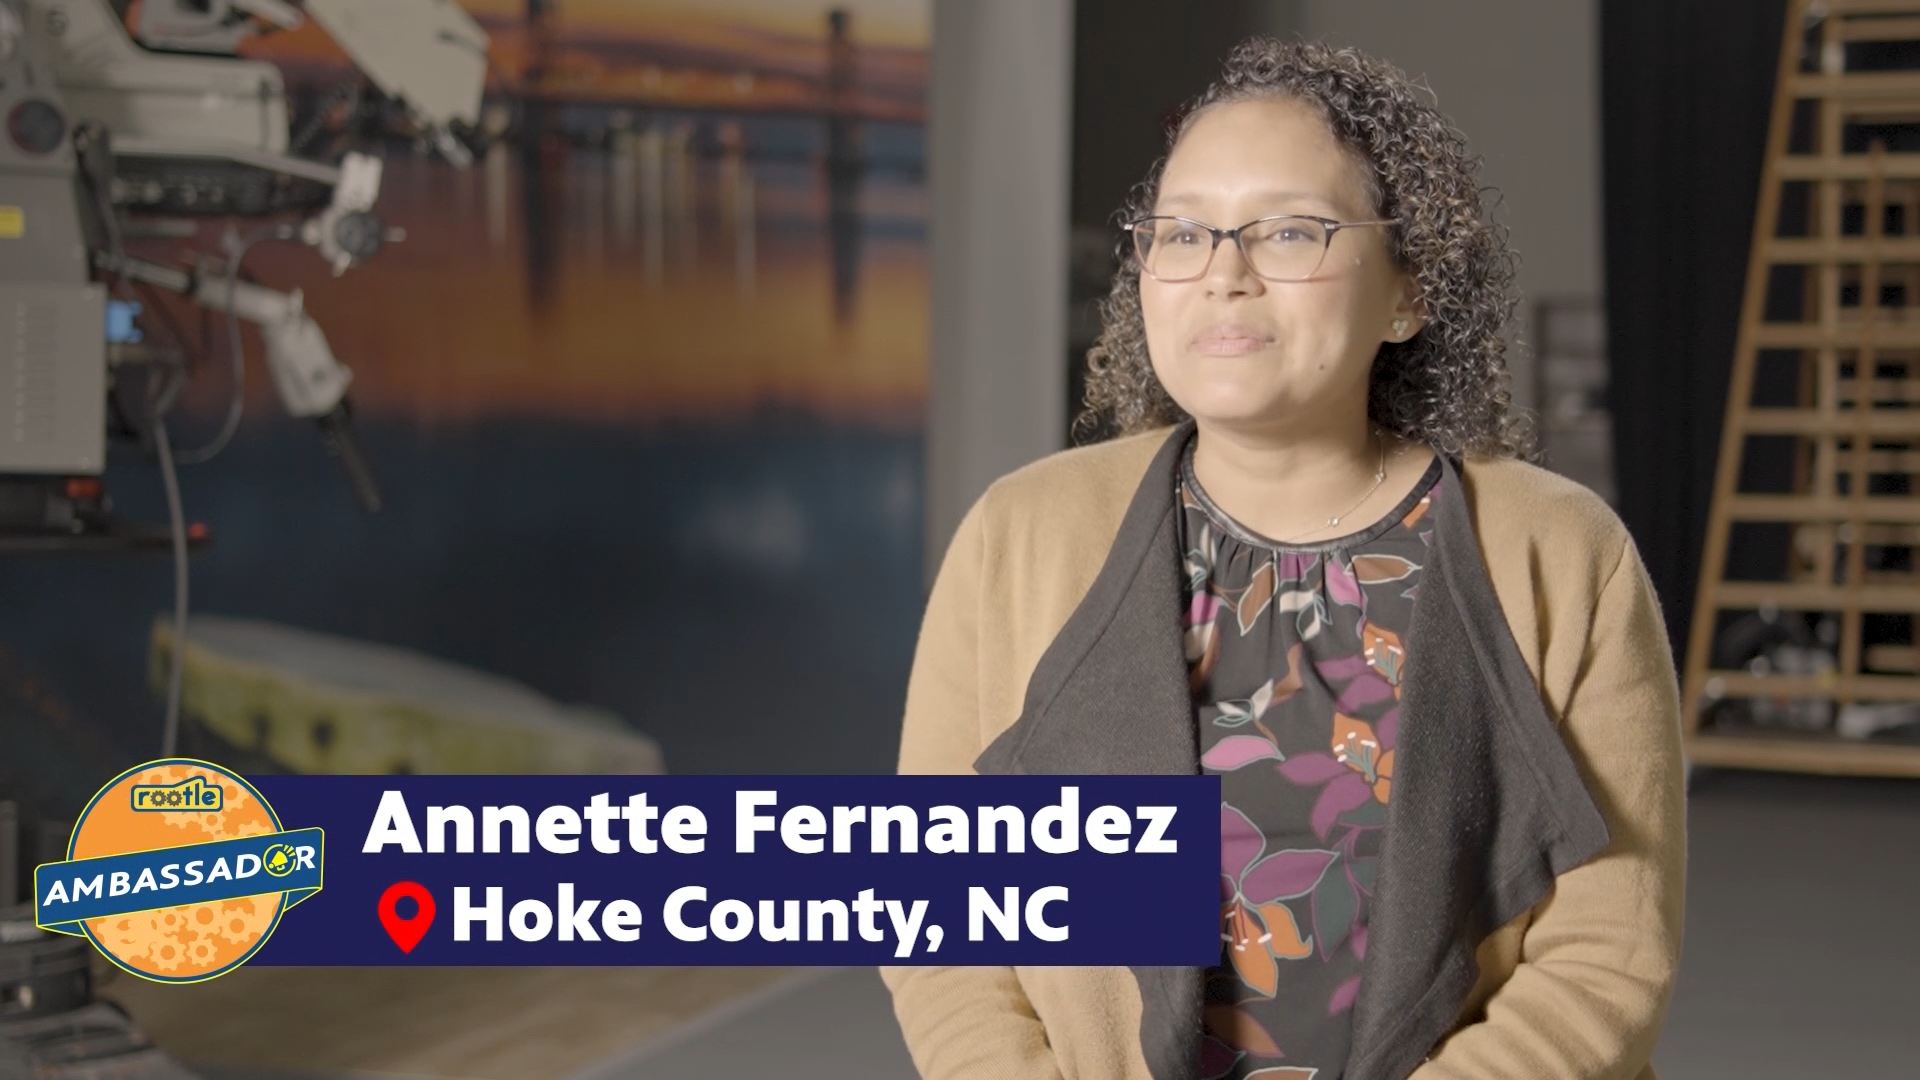 Meet Annette Fernandez, Hoke County Rootle Ambassador